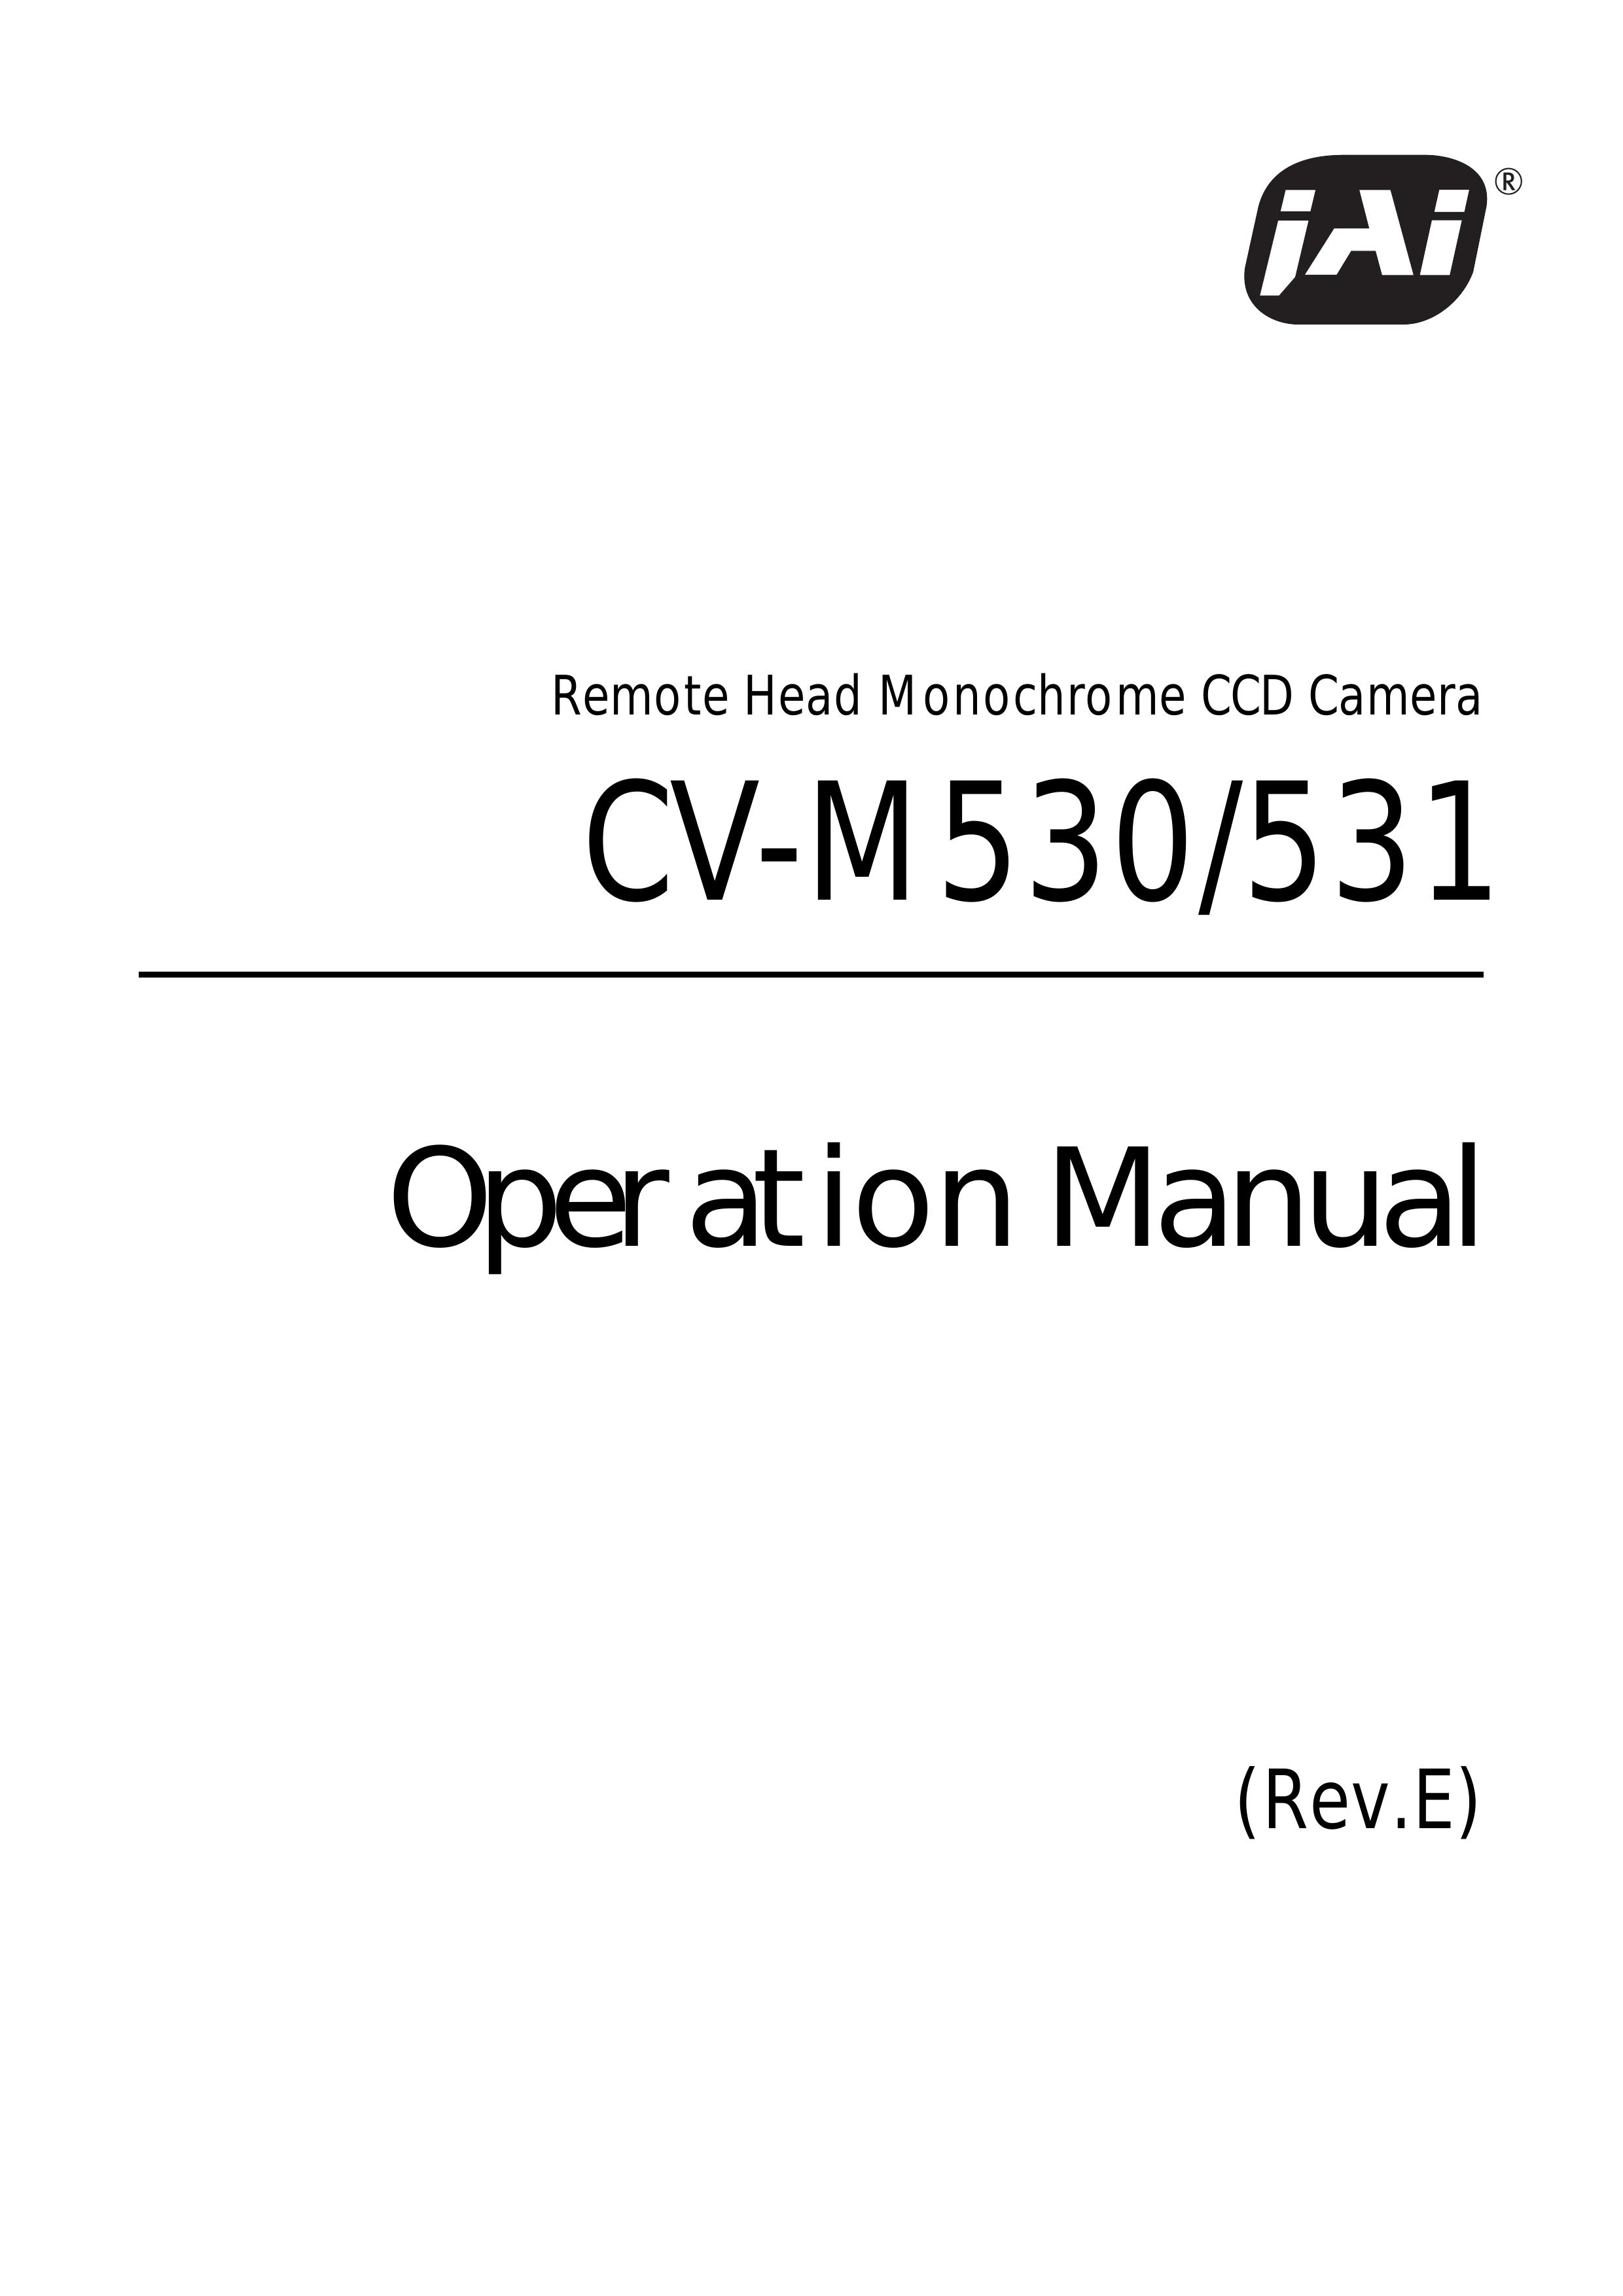 JAI CV-M530 Security Camera User Manual